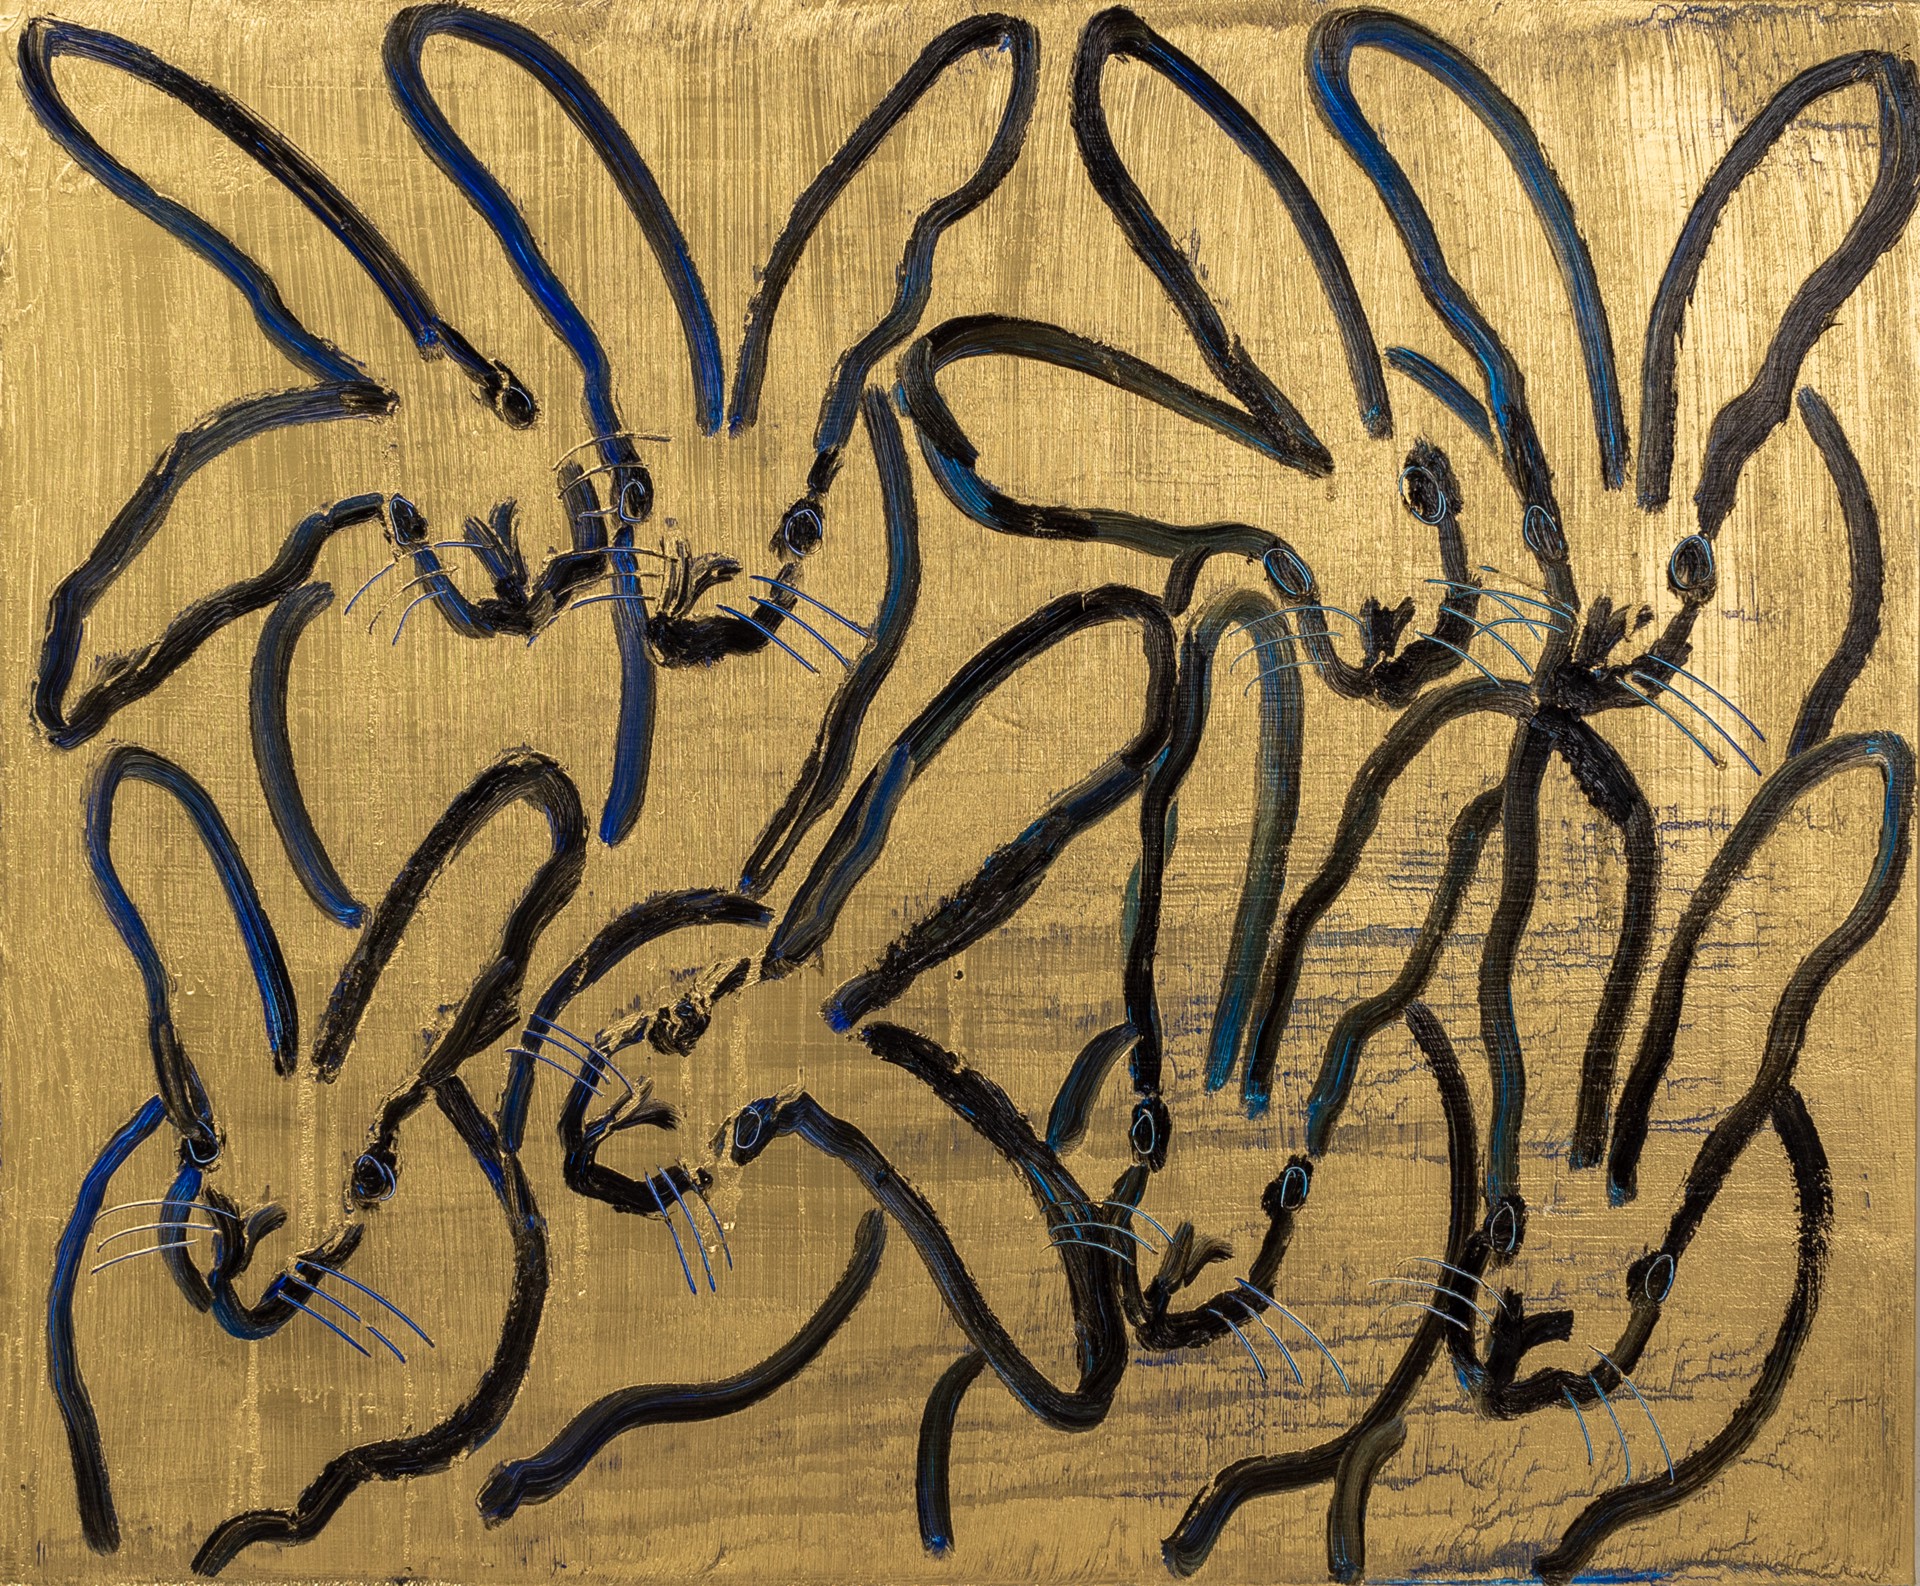 Hunt Slonem Art For Sale - Hunt Slonem Blue Streak Oil on canvas30 x 36 in